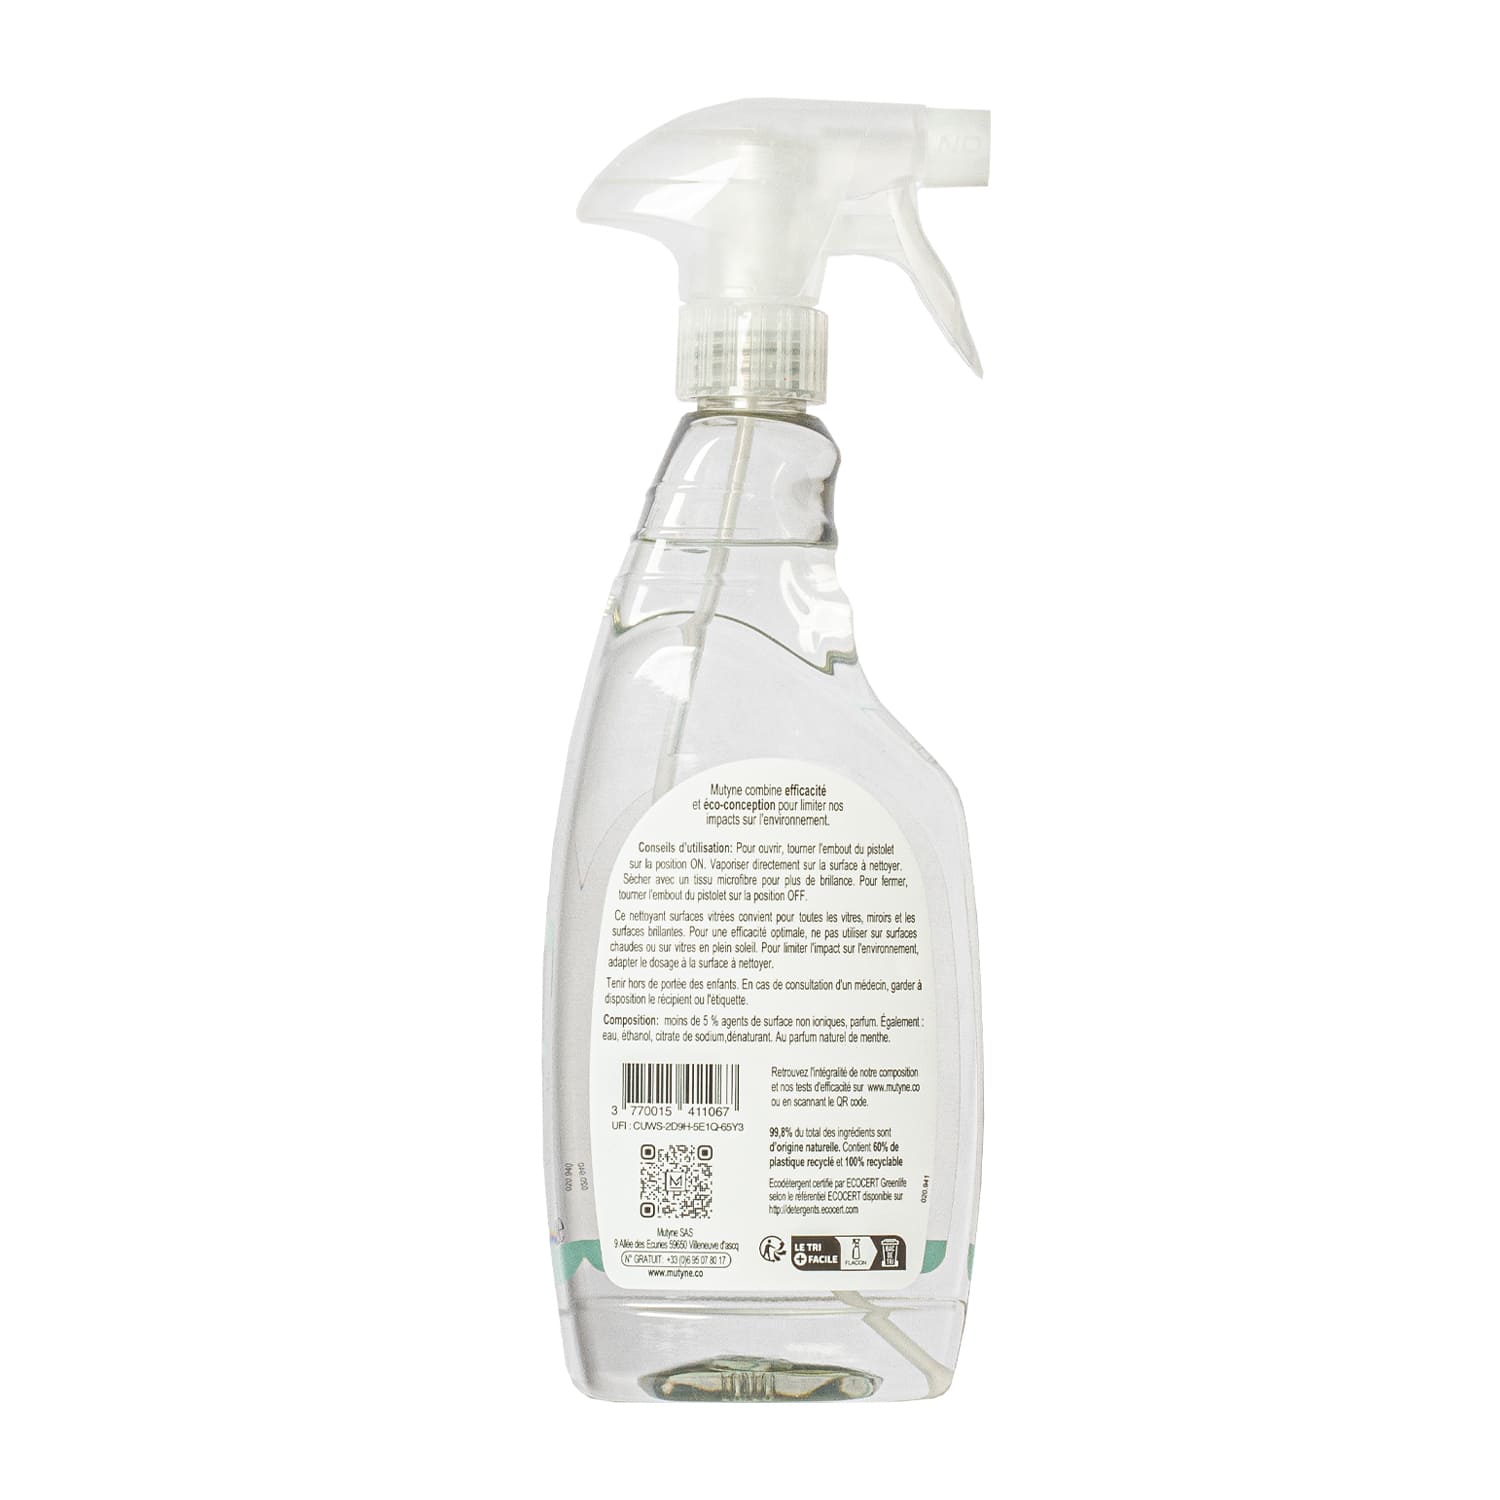 Spray nettoyant vitres 500 ml - SAFE – Les petits écolos